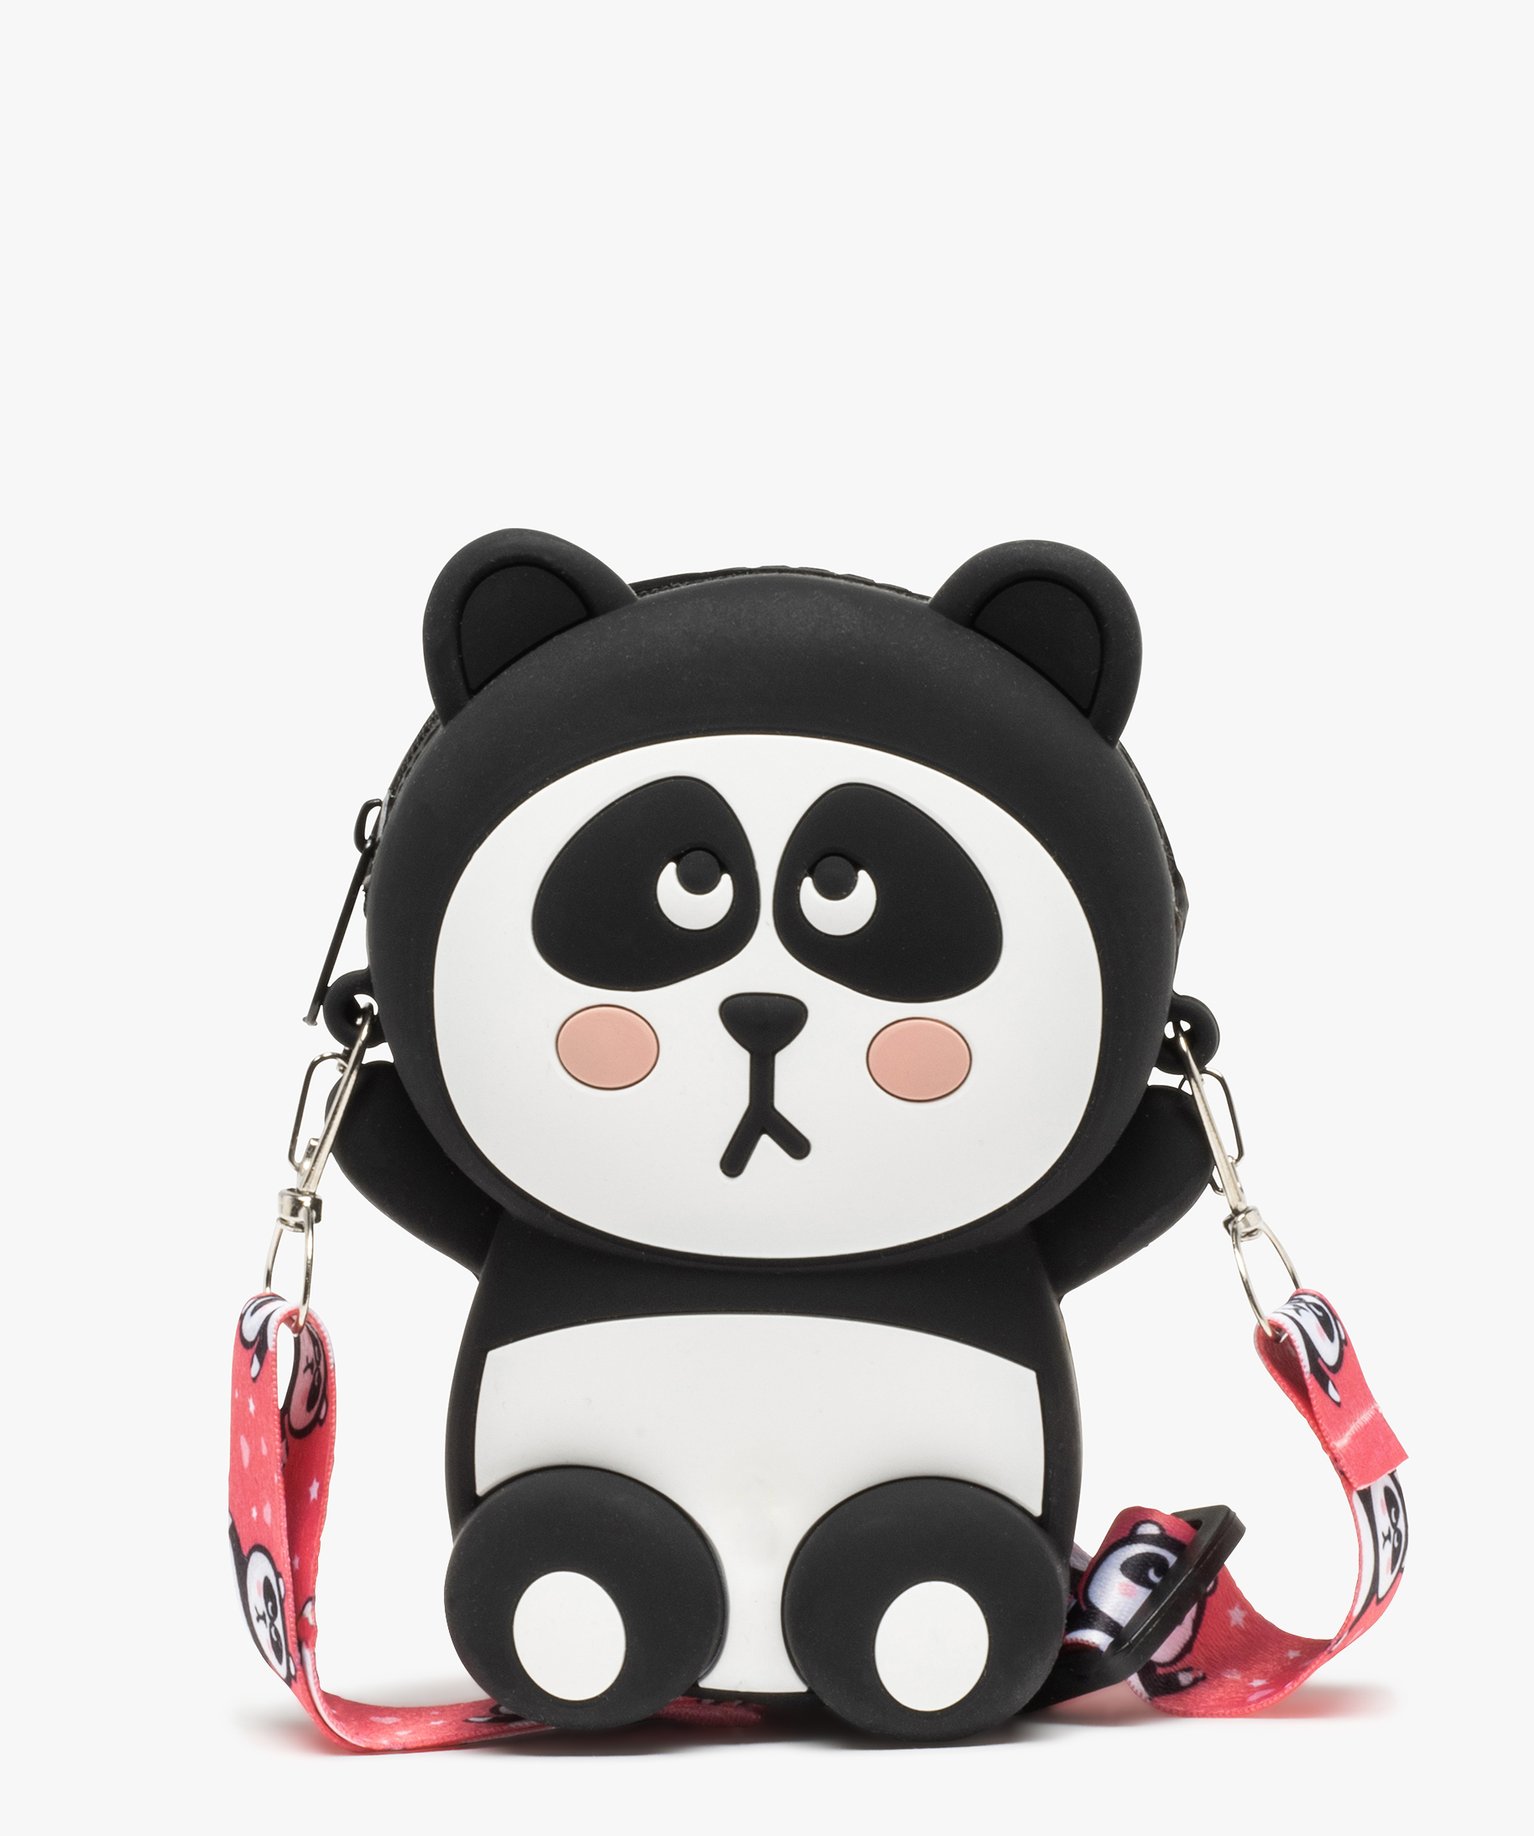 Pochette fille forme panda avec cordon satiné amovible